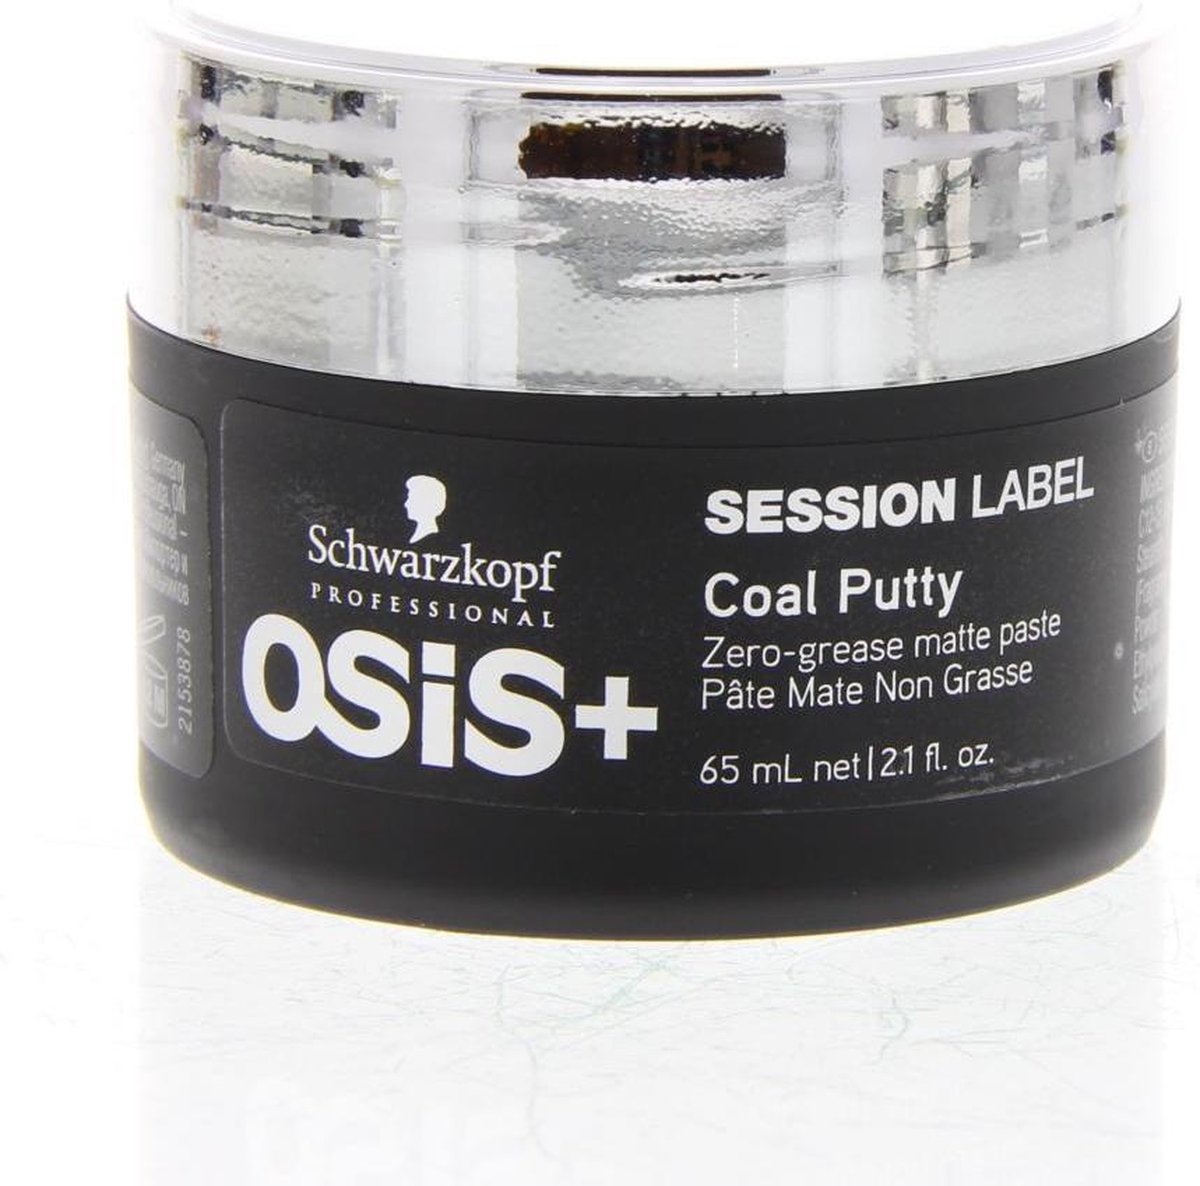 Schwarzkopf Pasta Session Label Osis+ Coal Putty | bol.com